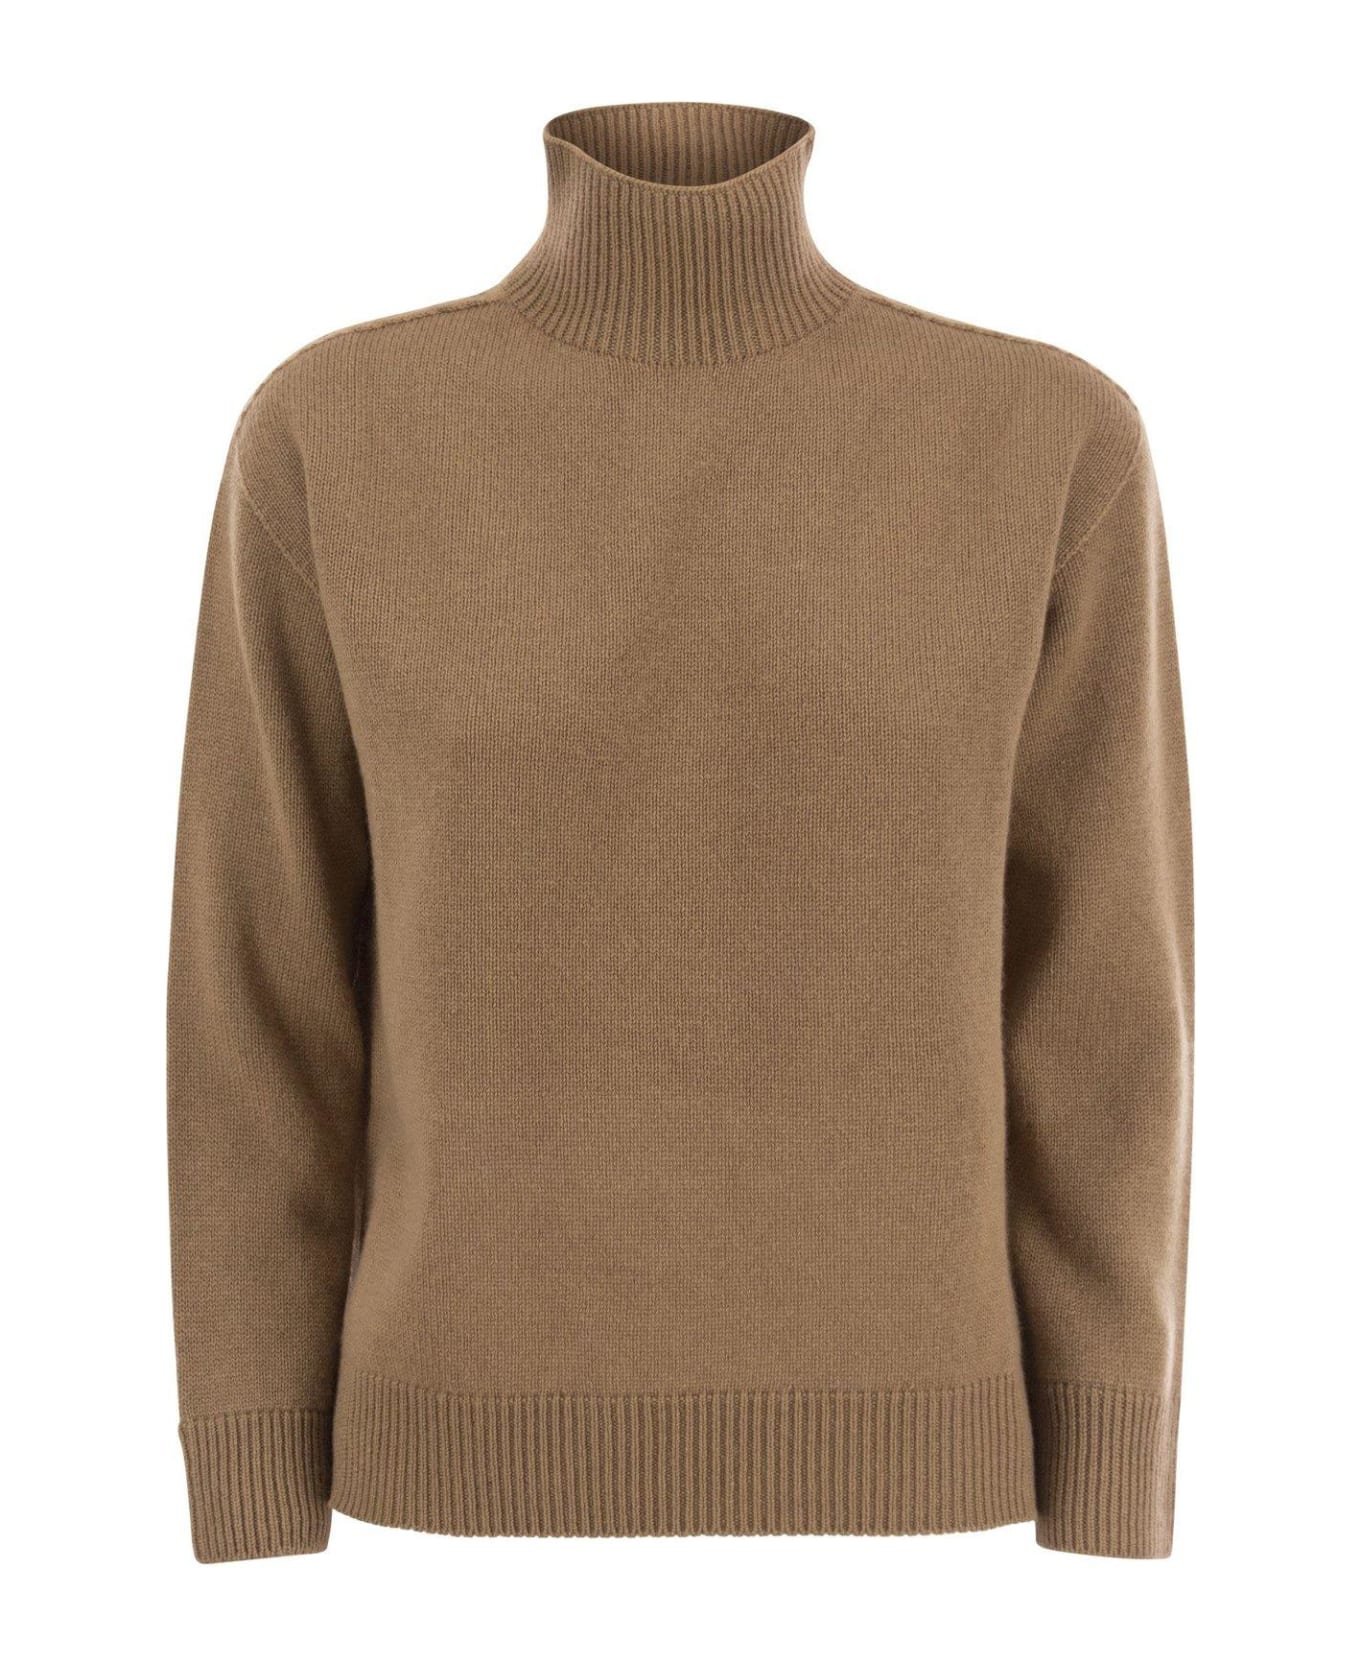 'S Max Mara Cashmere Turtleneck Sweater - Camel ニットウェア